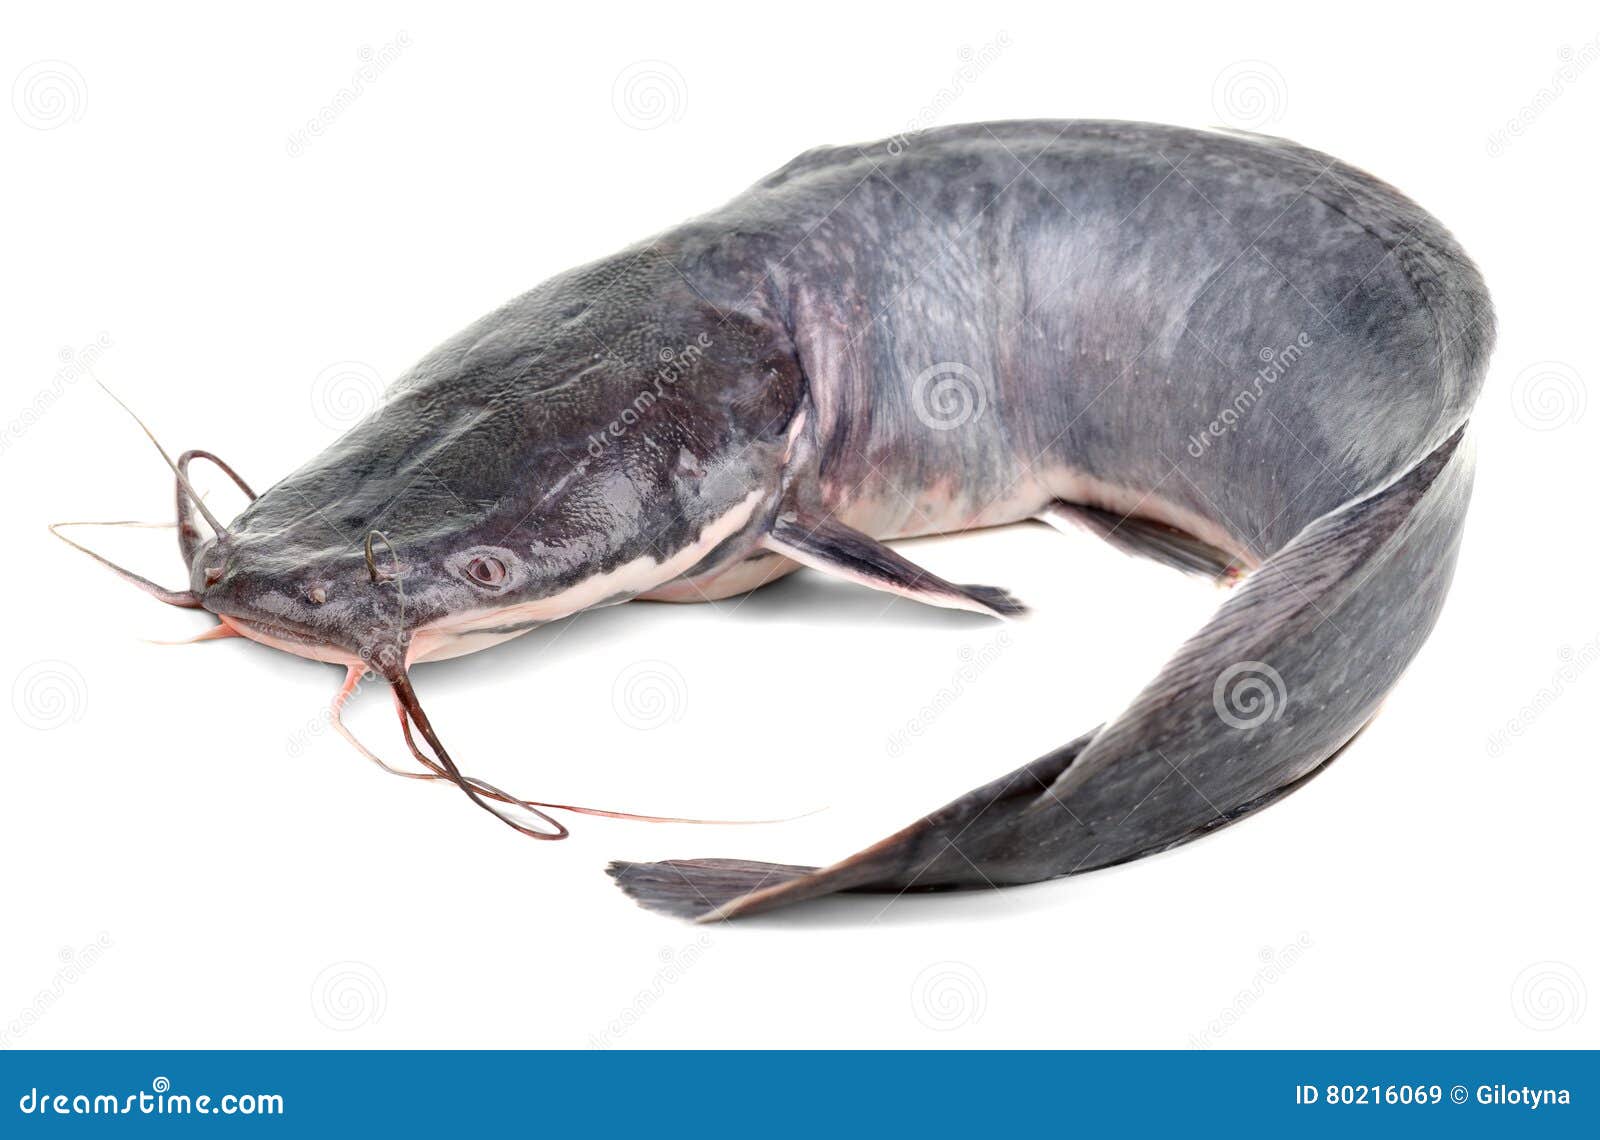 129 African Catfish Stock Photos - Free & Royalty-Free Stock